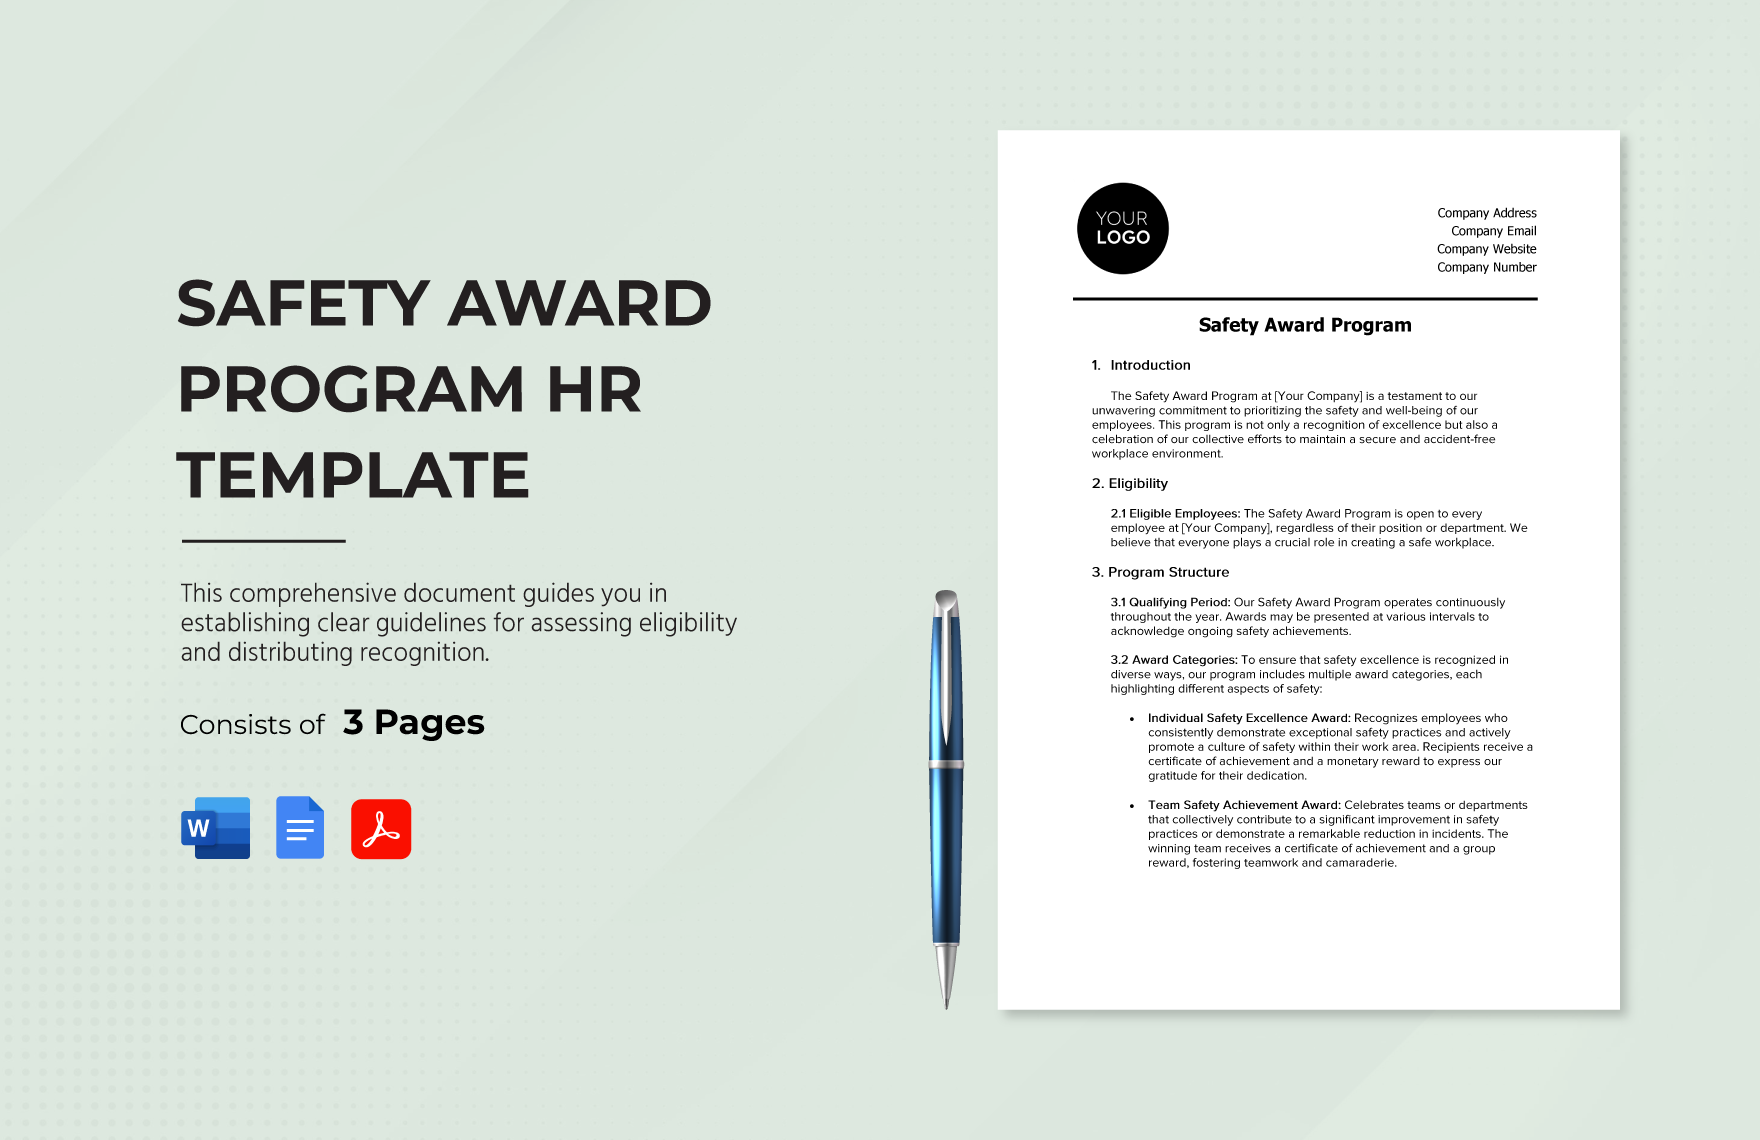 Safety Award Program HR Template